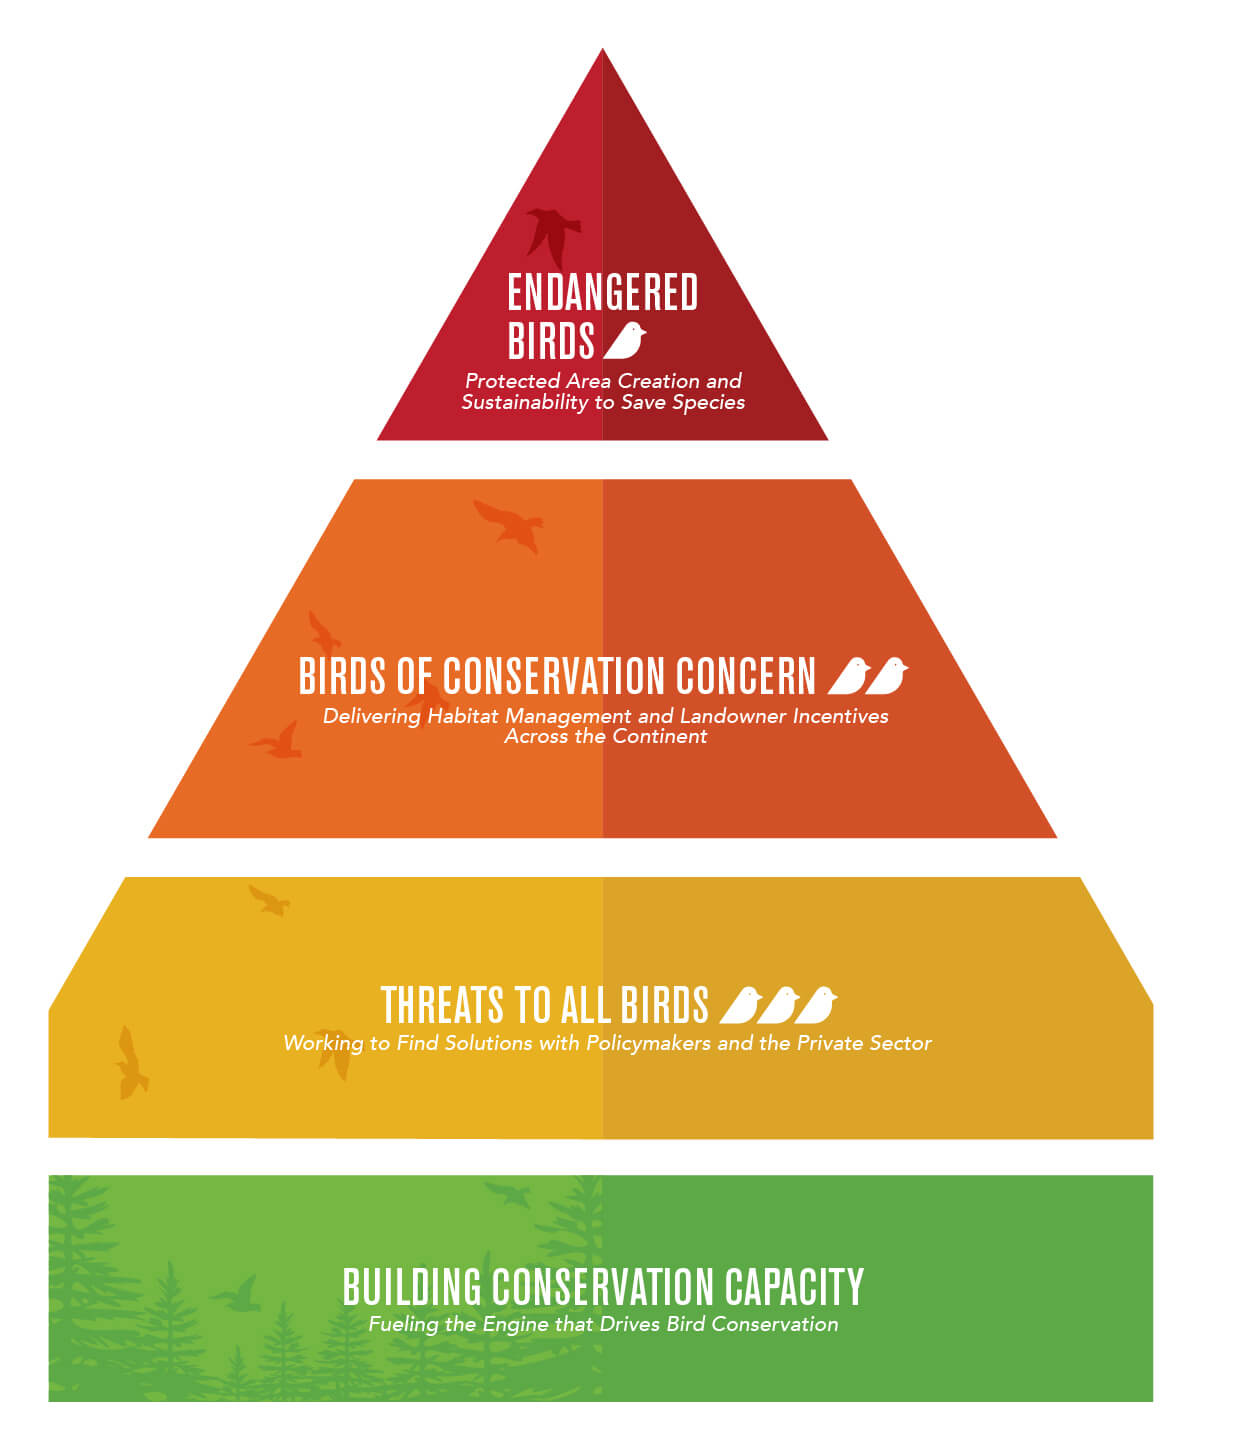 American Bird Conservancy's strategic framework